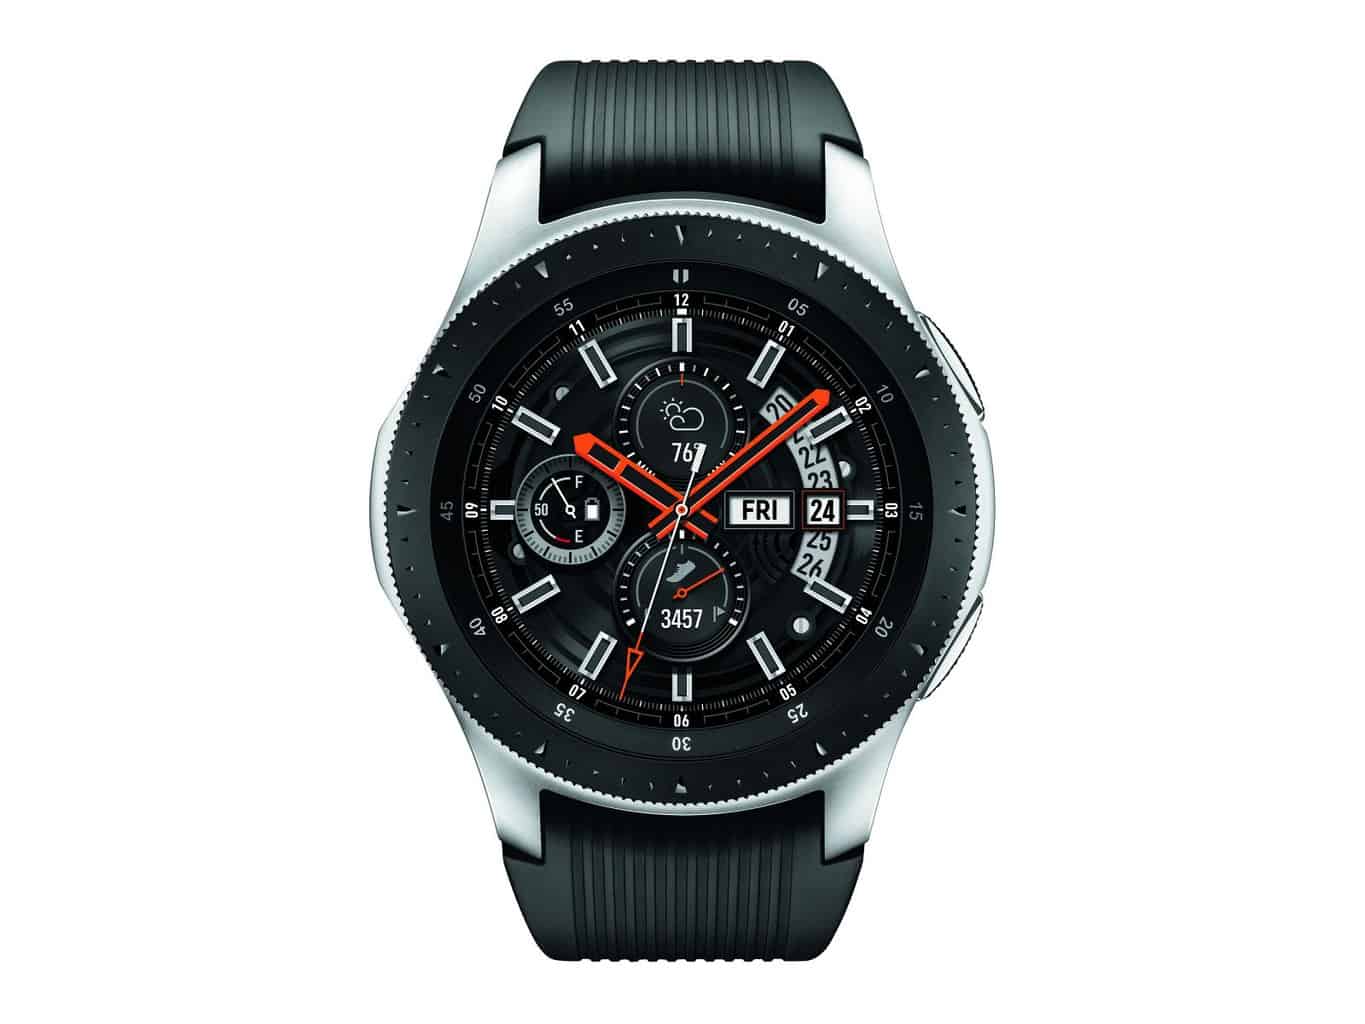 Dapat dibilang kalau Galaxy Watch adalah salah satu smartwatch terbaik yang ada di pasaran saat ini